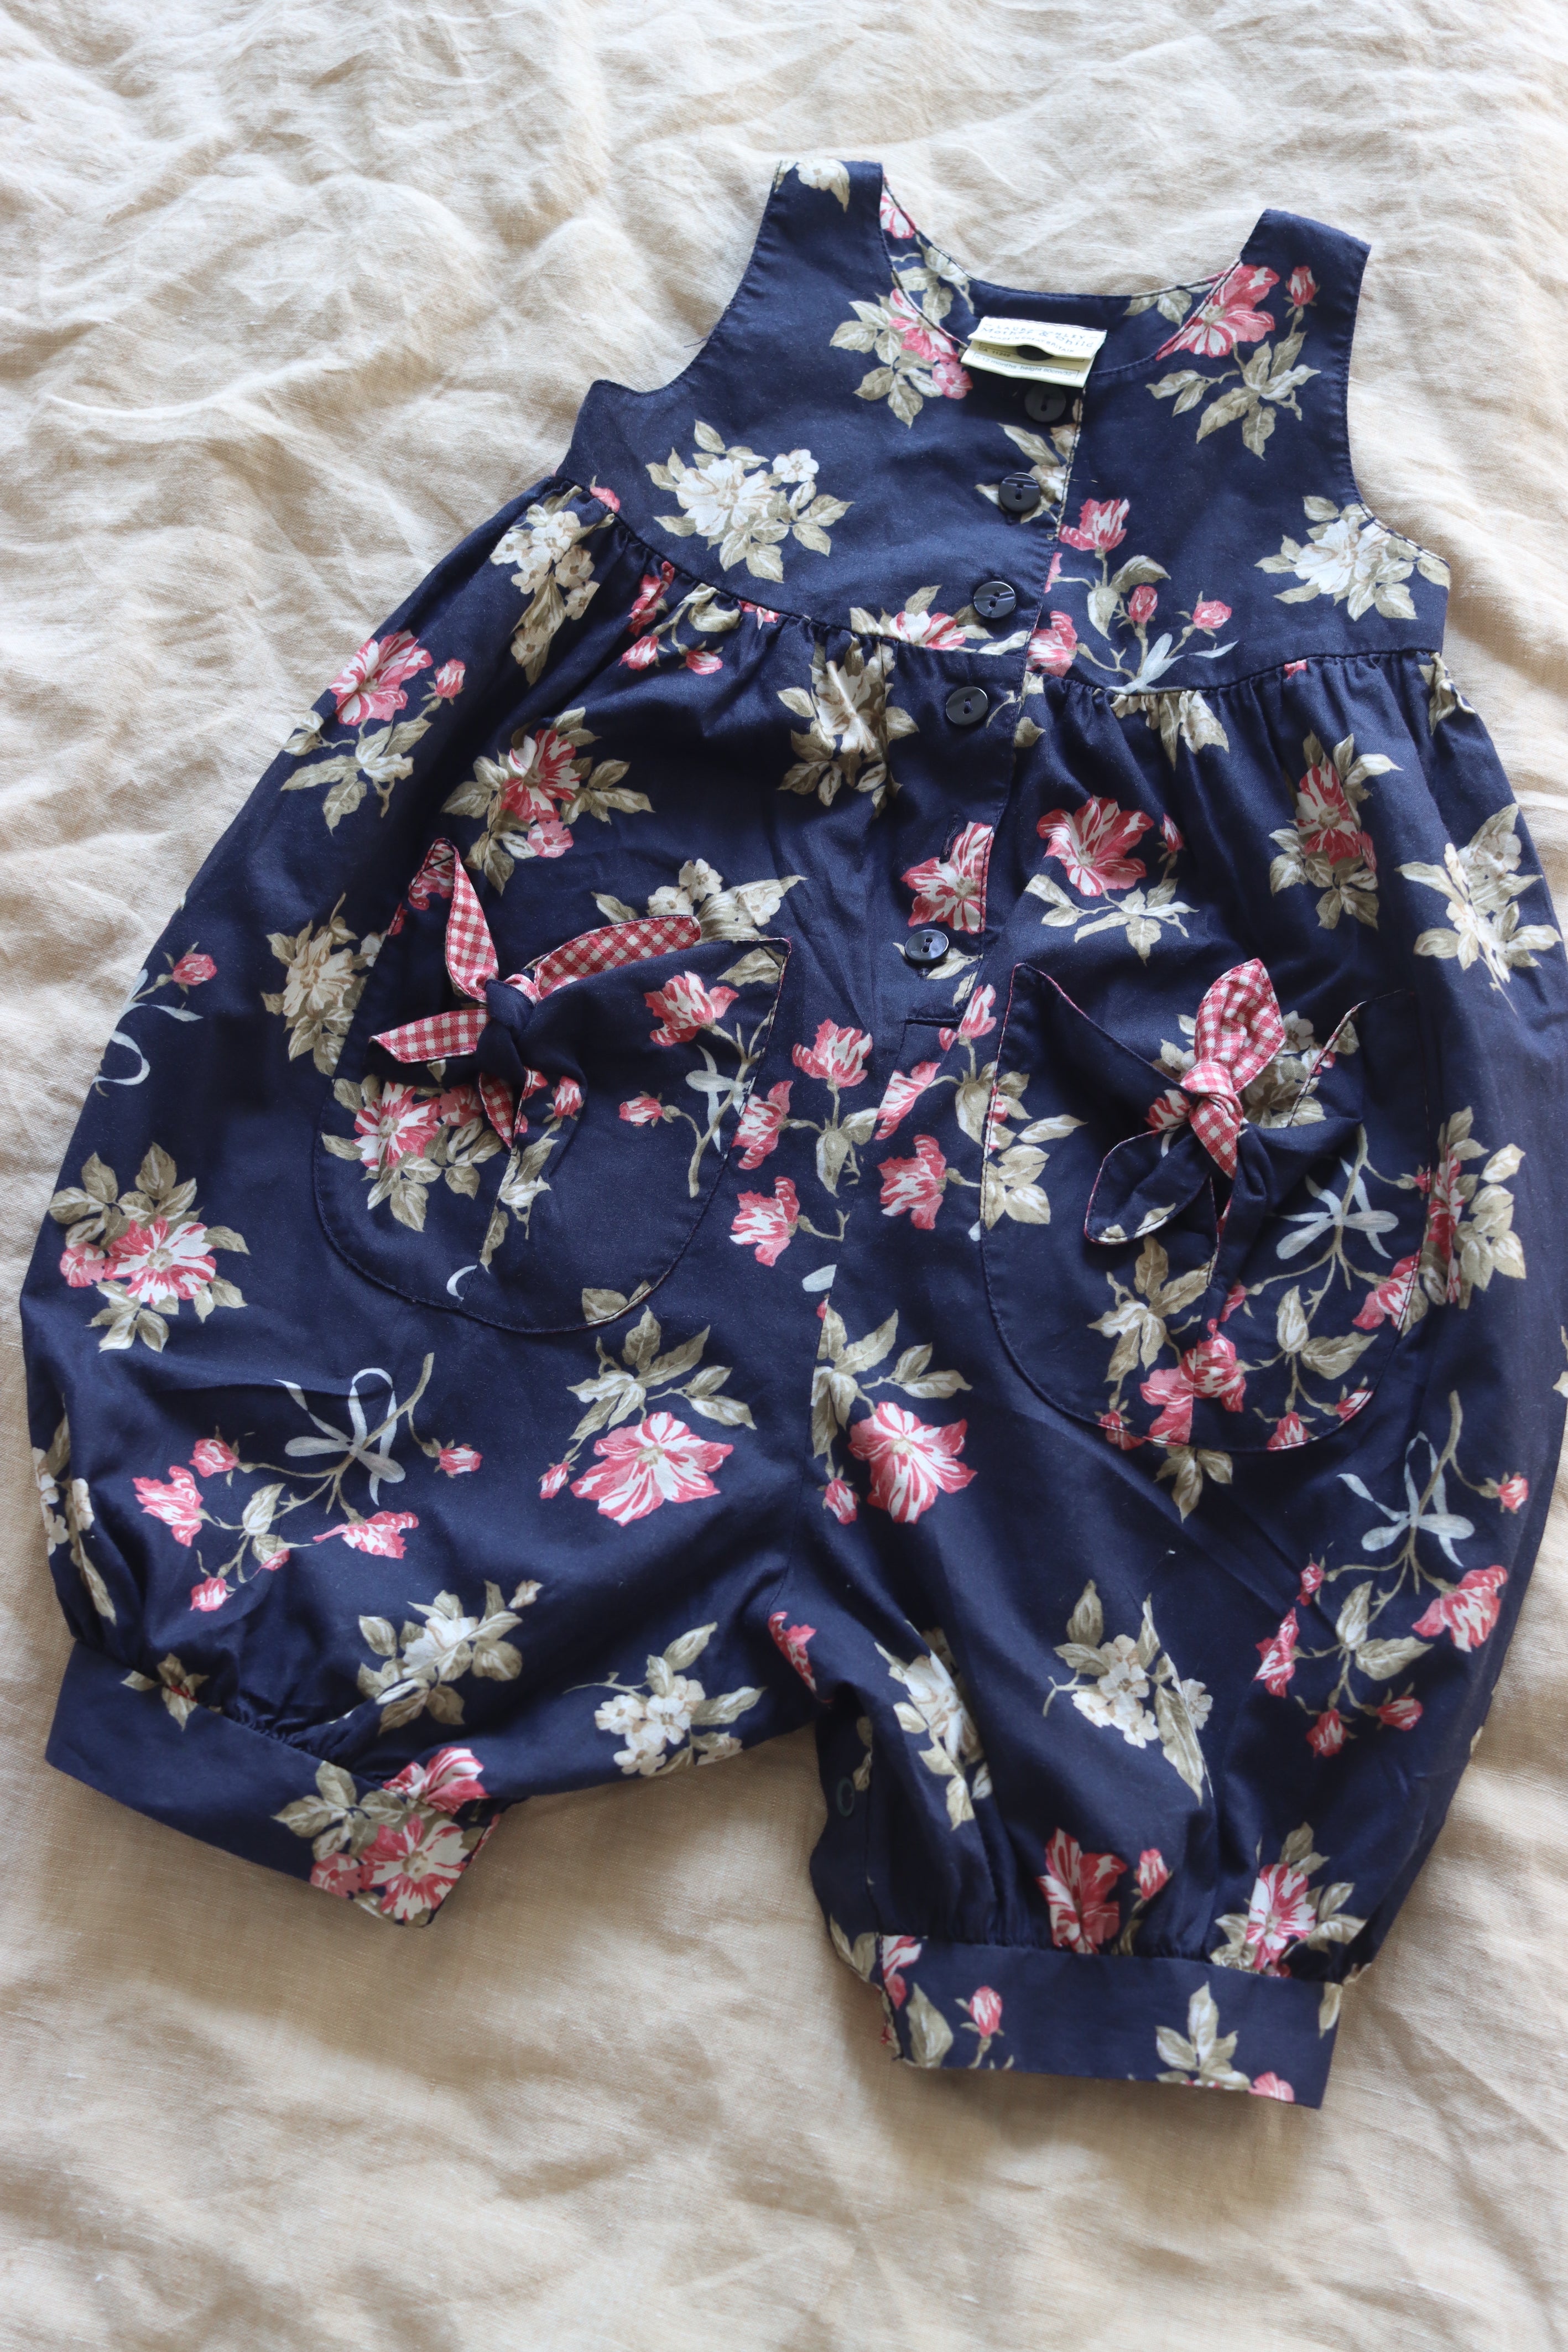 Vintage dark floral Laura Ashley jumpsuit - size 6-12 months - made in UK